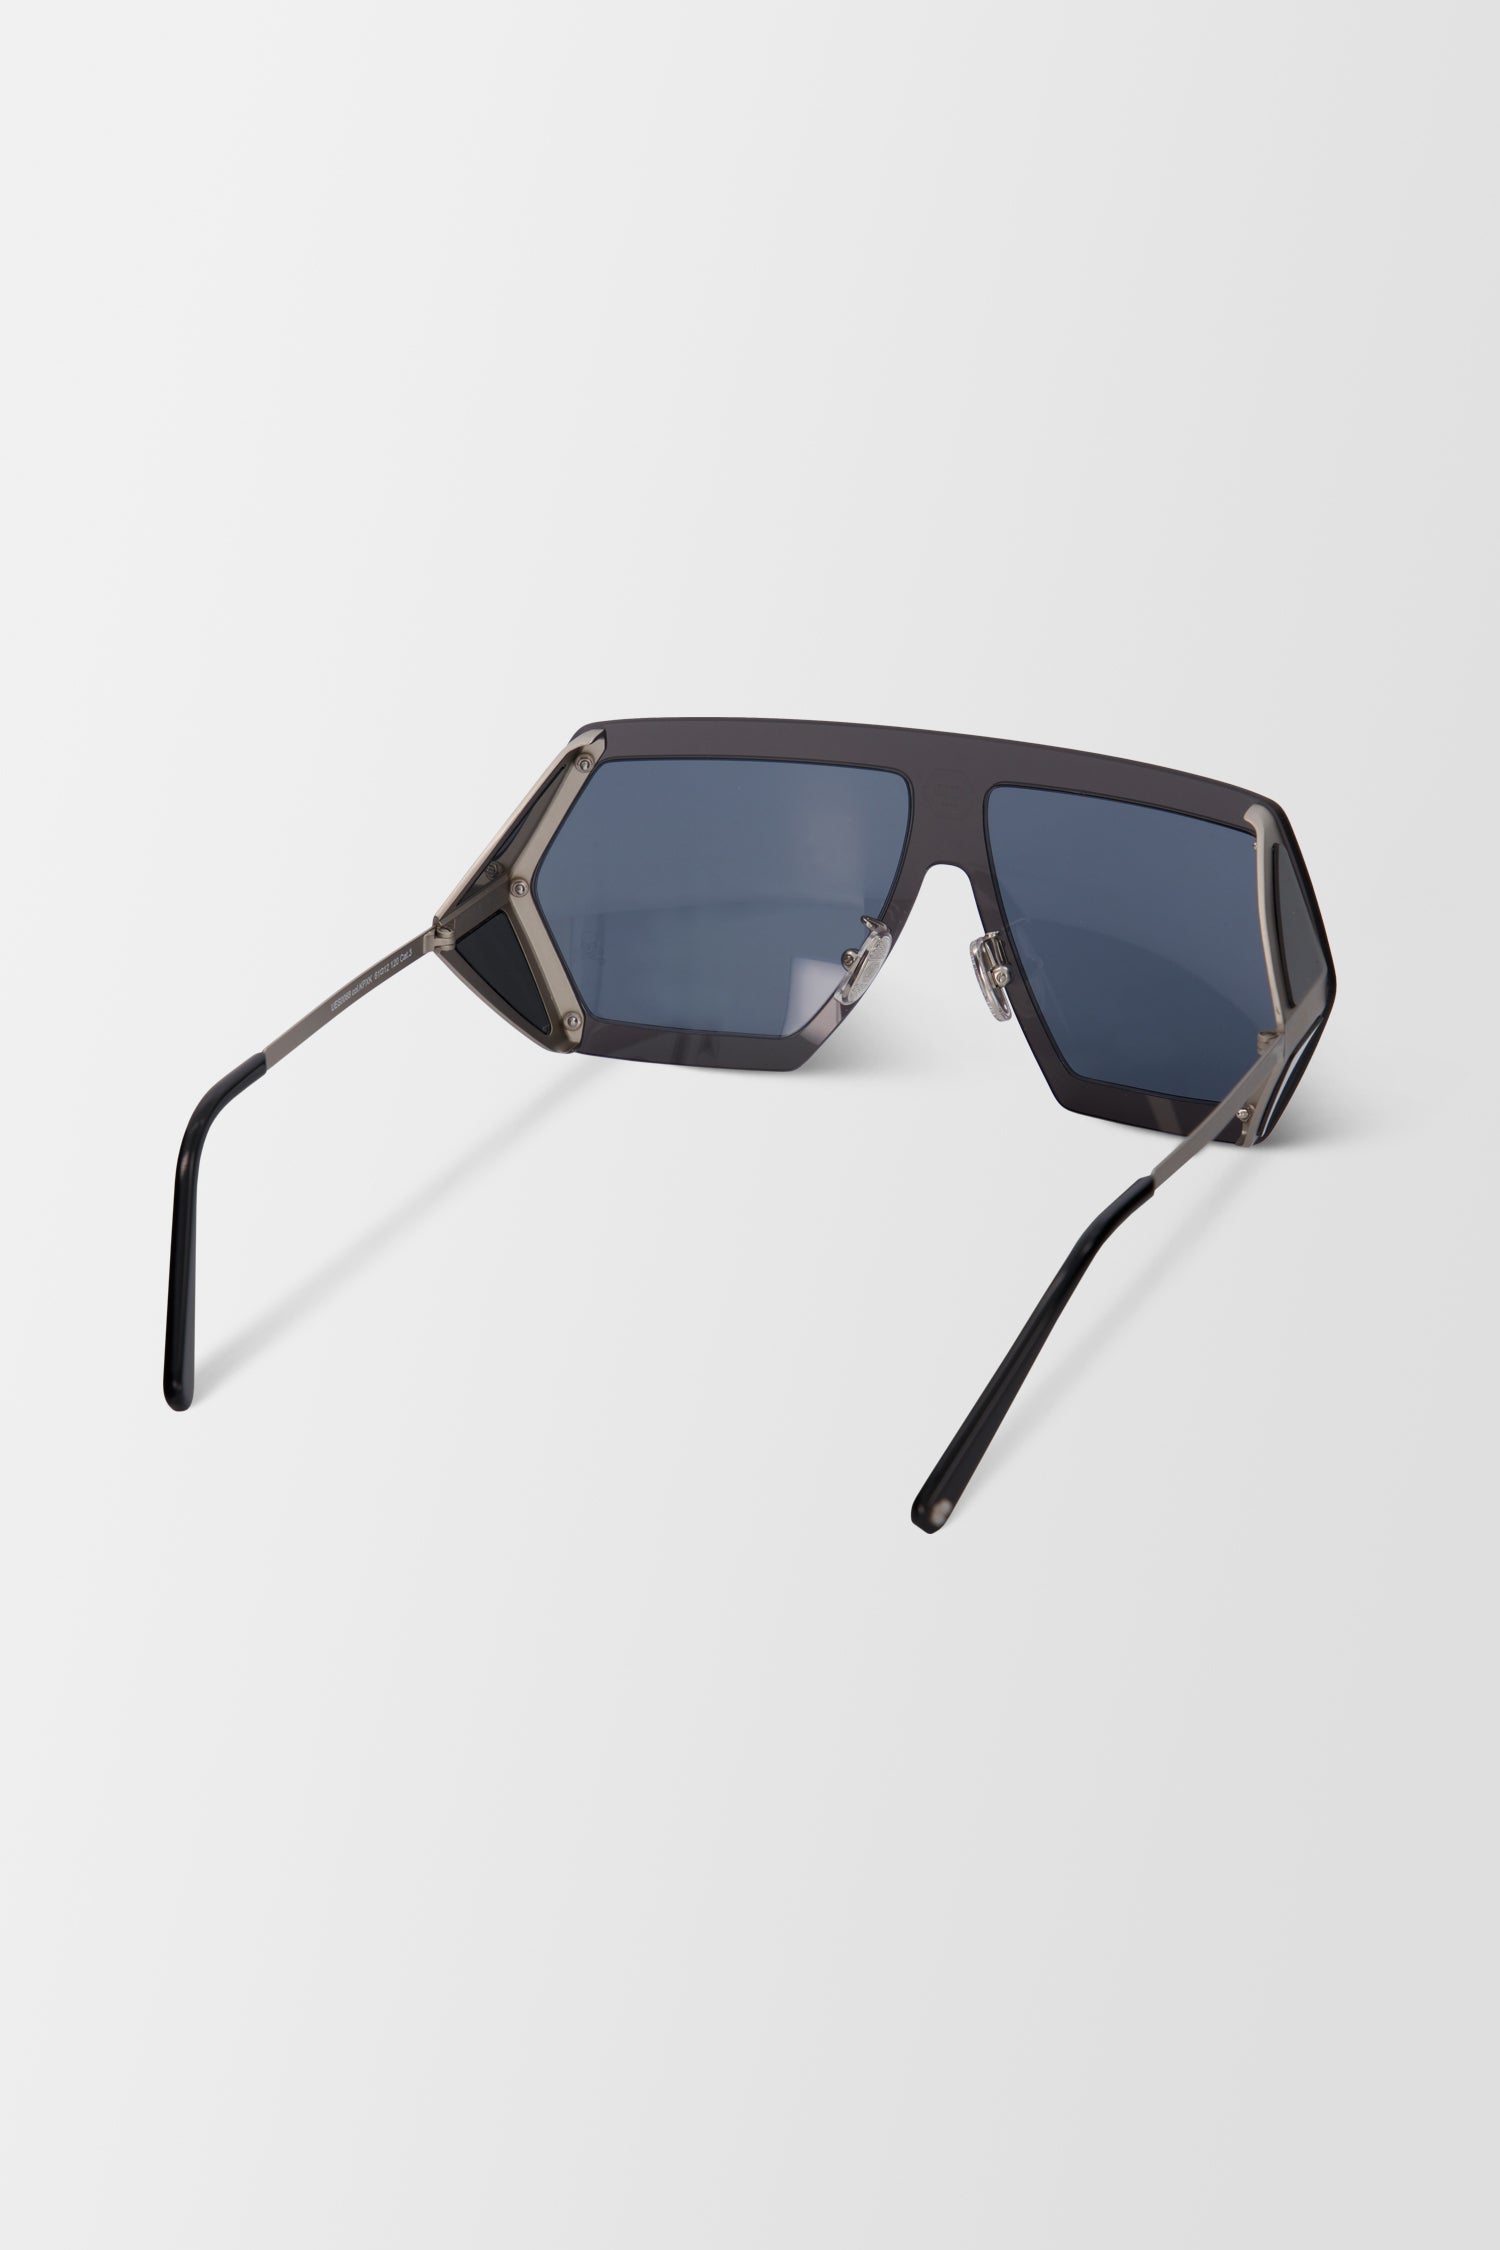 Philipp Plein Nickel/Blue Sunglasses